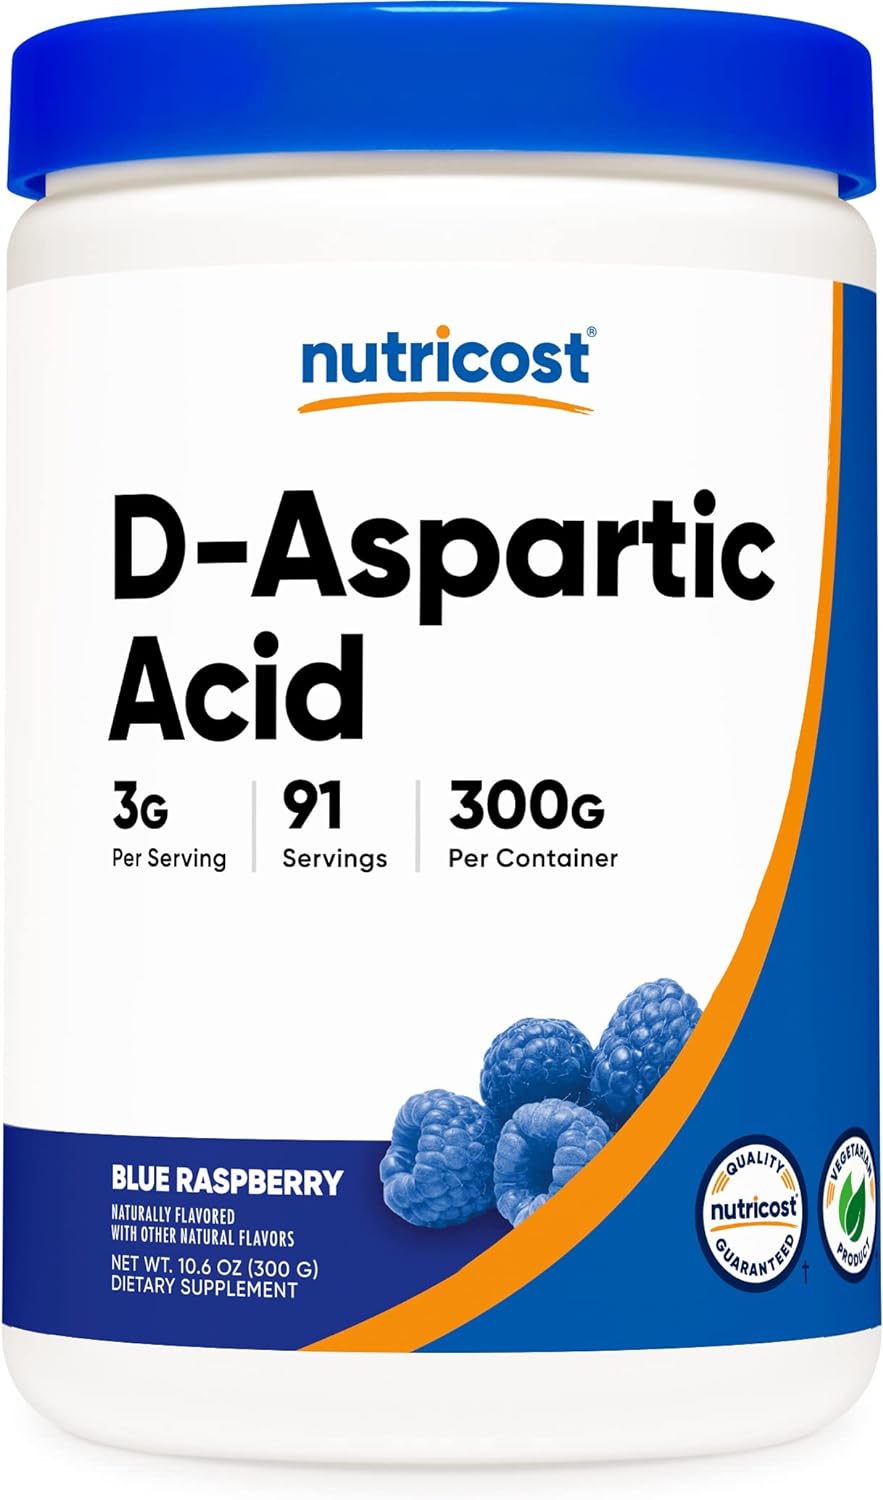 Nutricost D-Aspartic Acid (DAA) Powder 300G (Blue Raspberry) - Flavored D-Aspartic Acid Powder Supplement